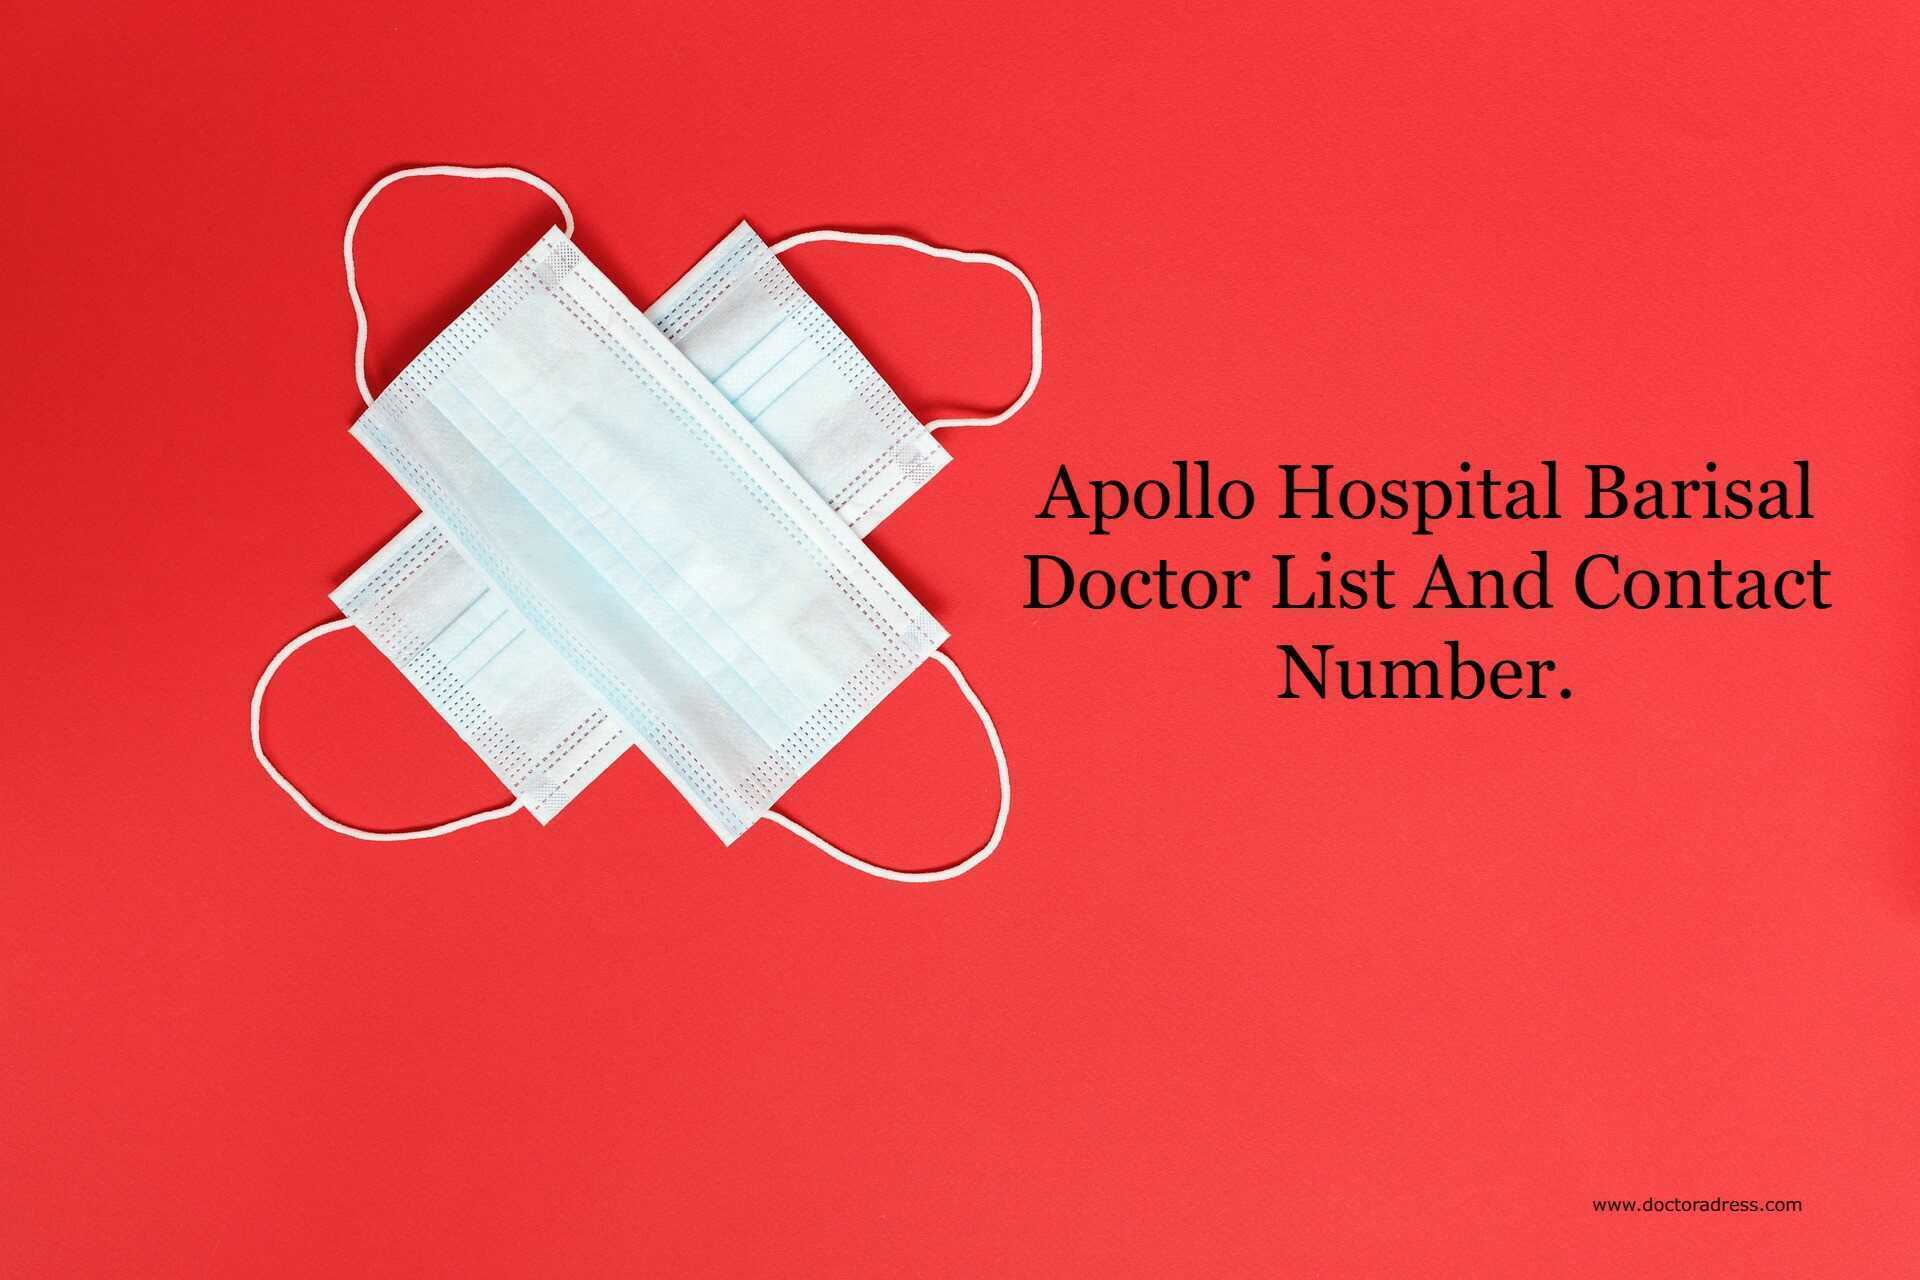 Apollo Hospital Barisal